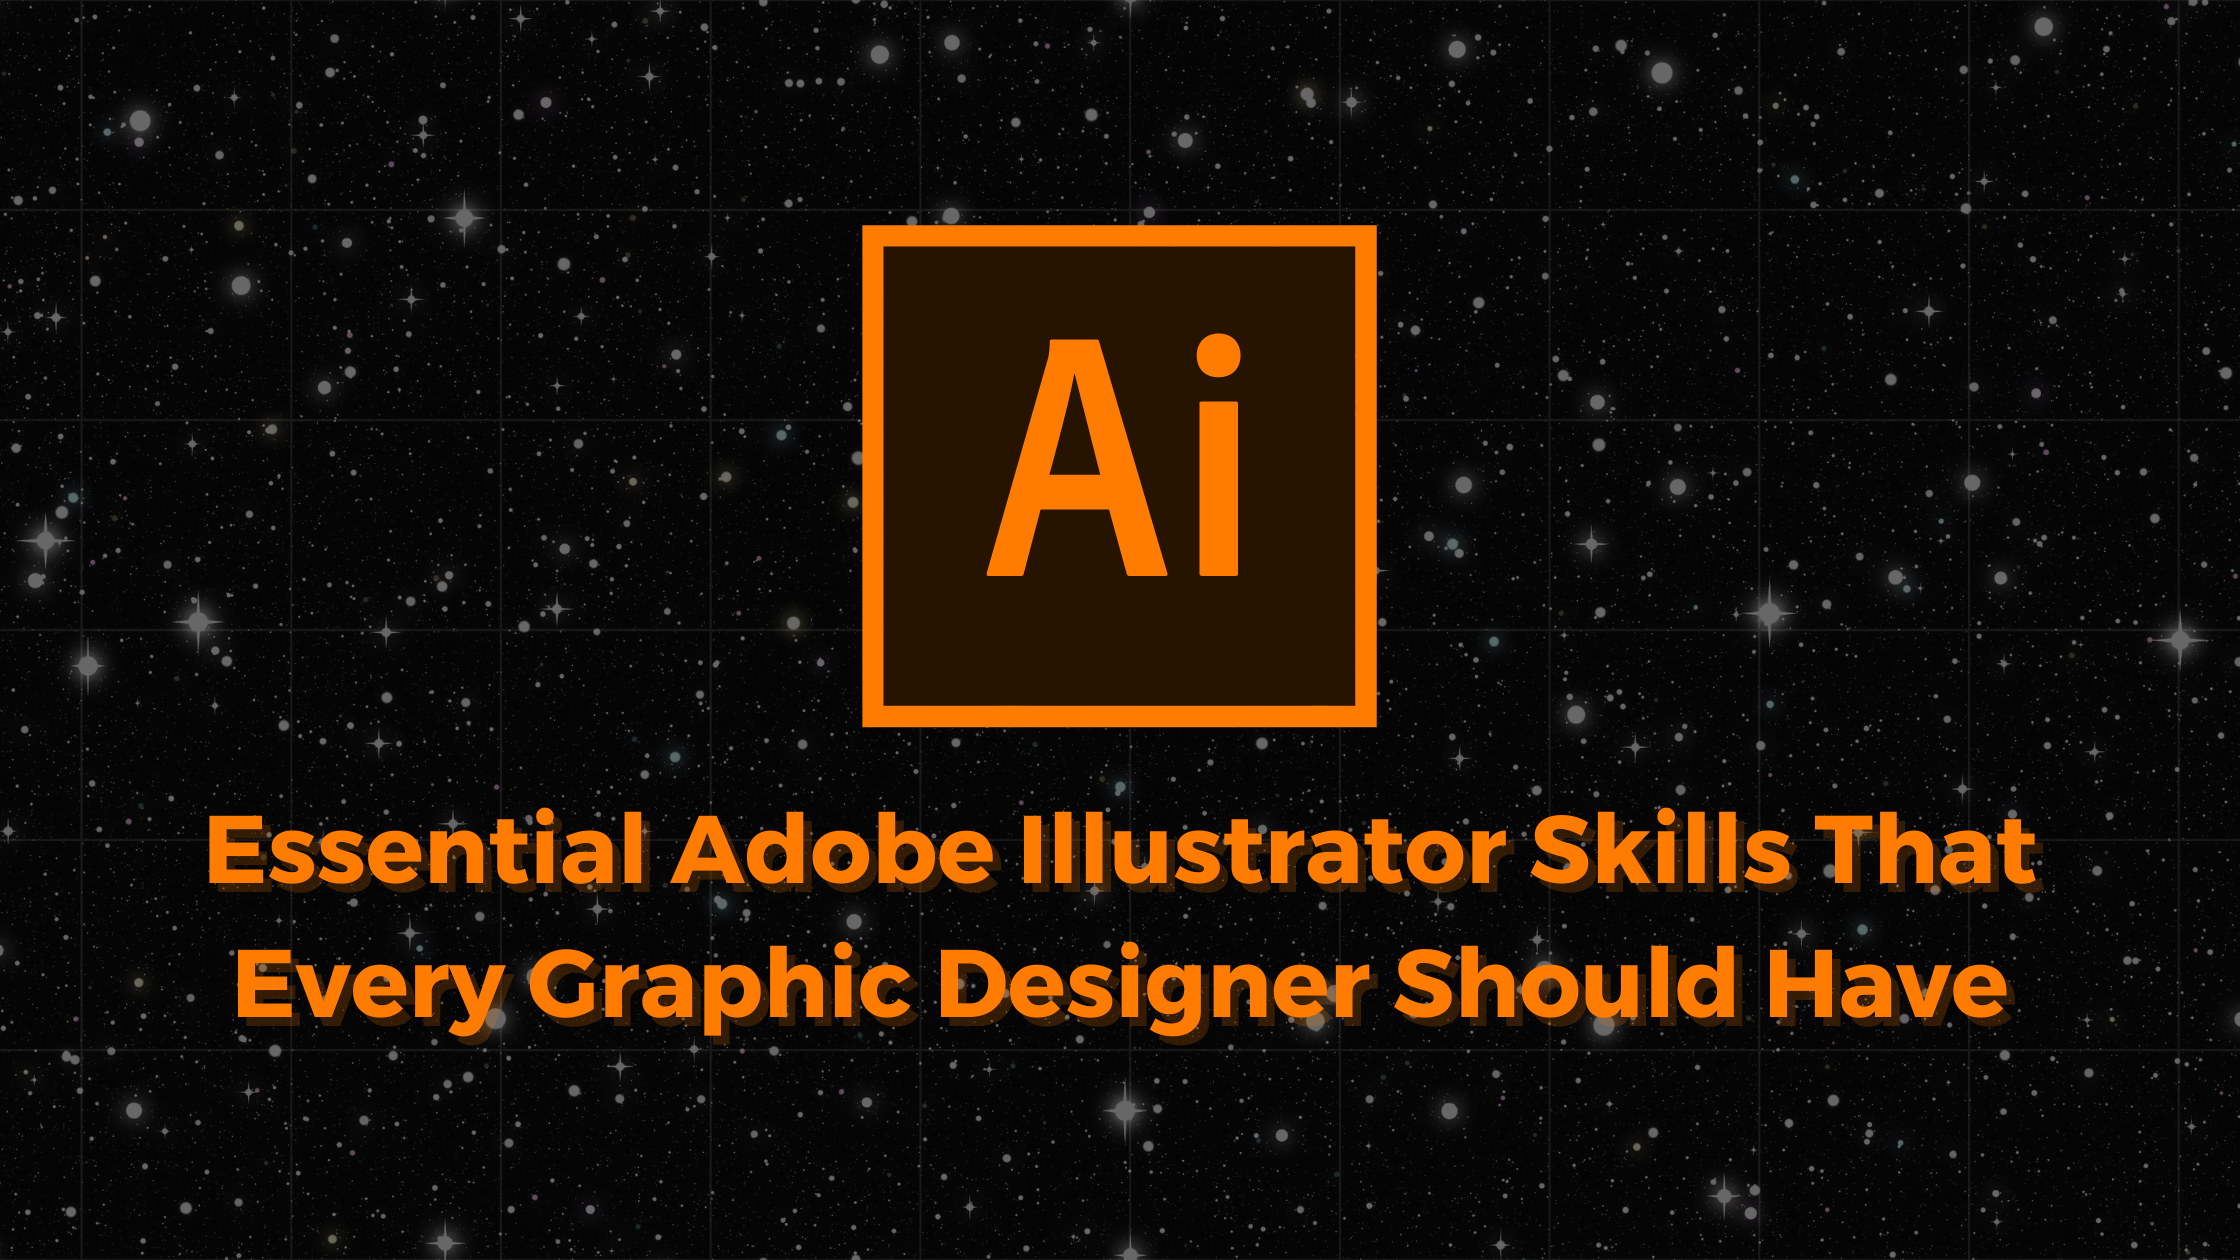 Essential Adobe Illustrator Skills That Every Graphic Designer Should Have